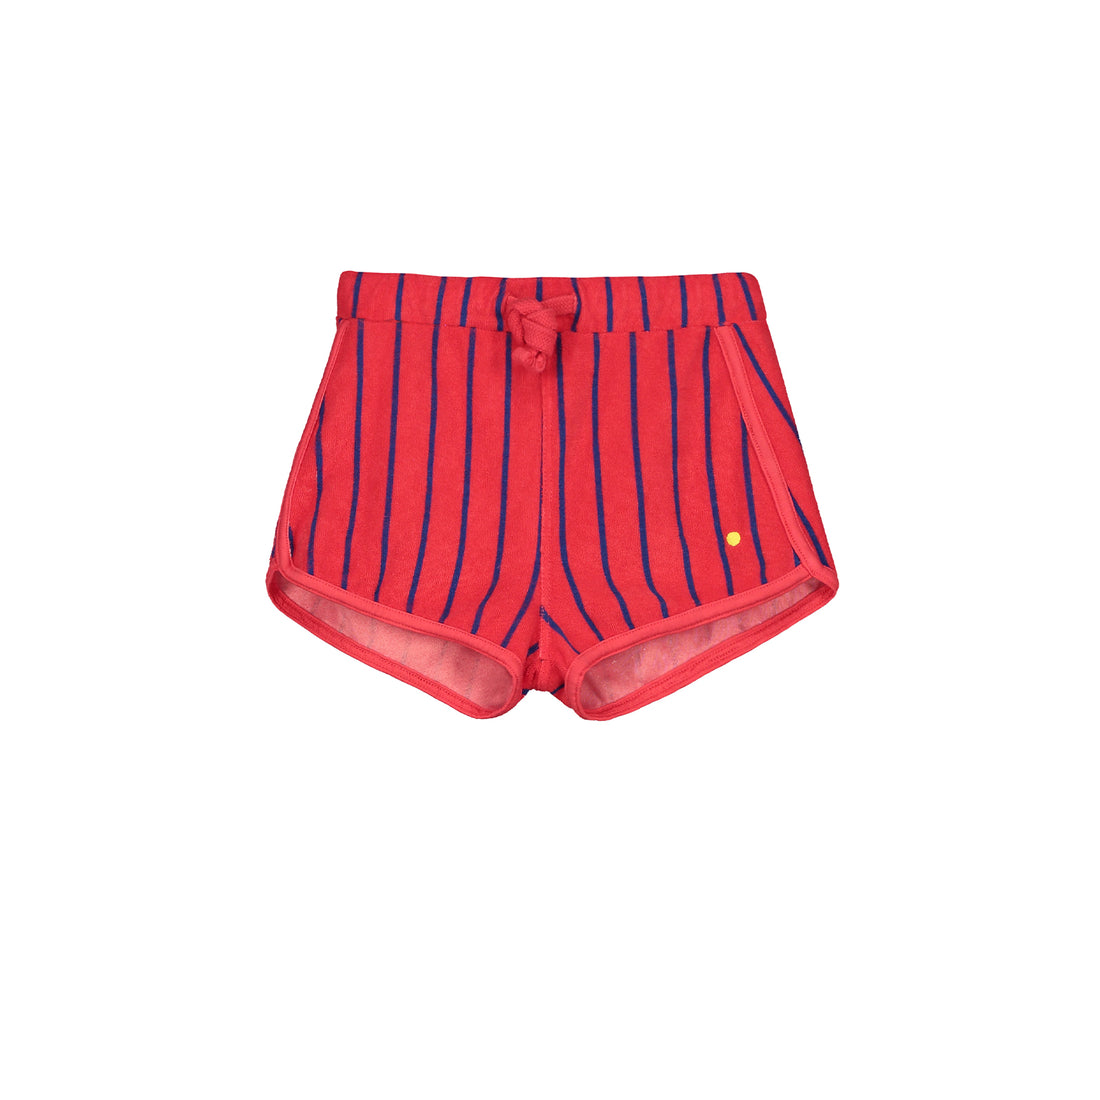 Bonmot - terry shorts all over stripes - red